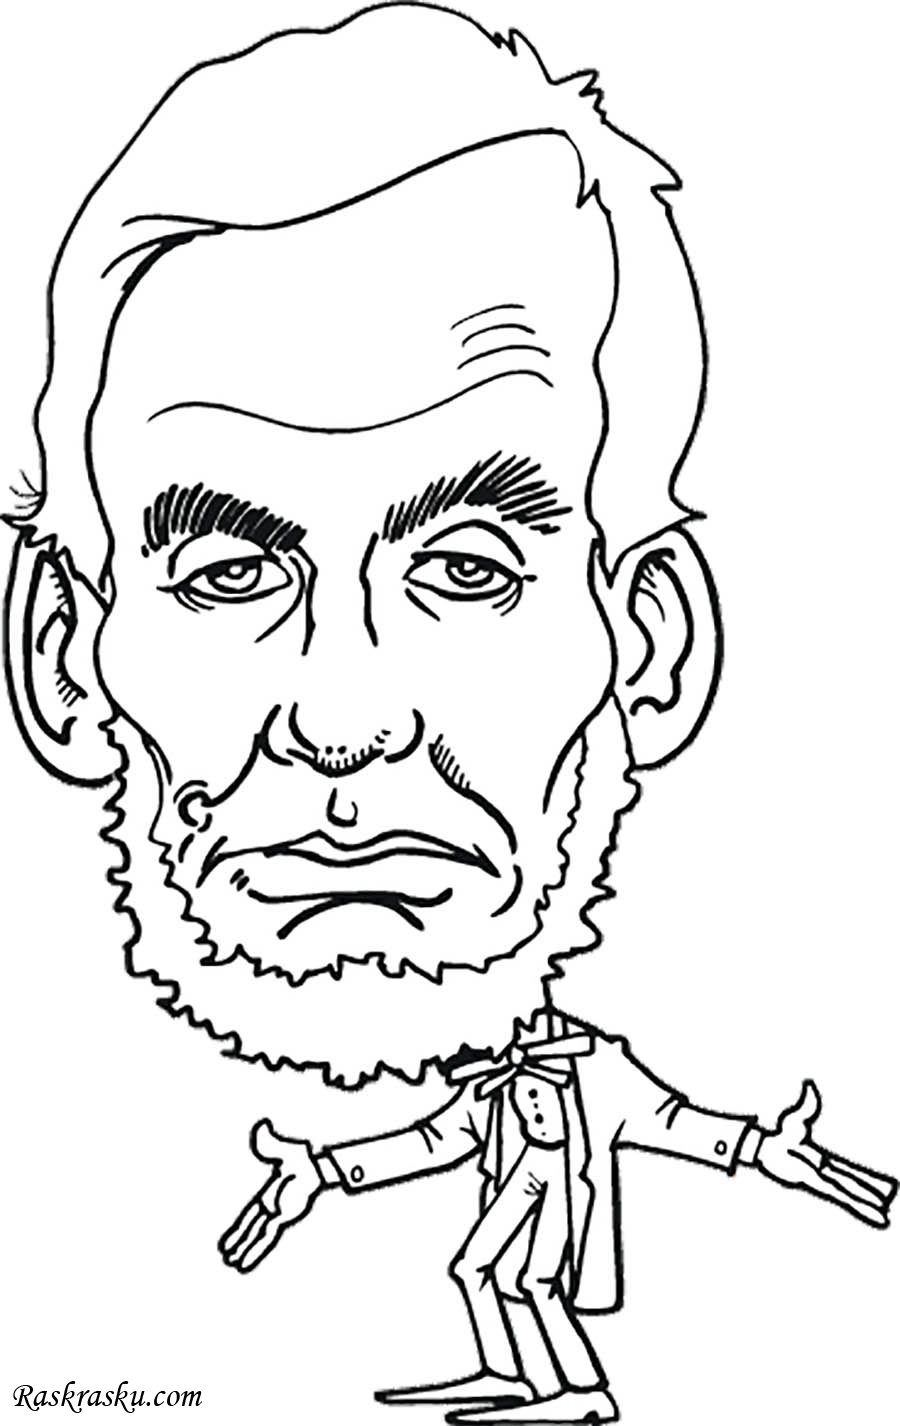 Abraham Lincoln caricature